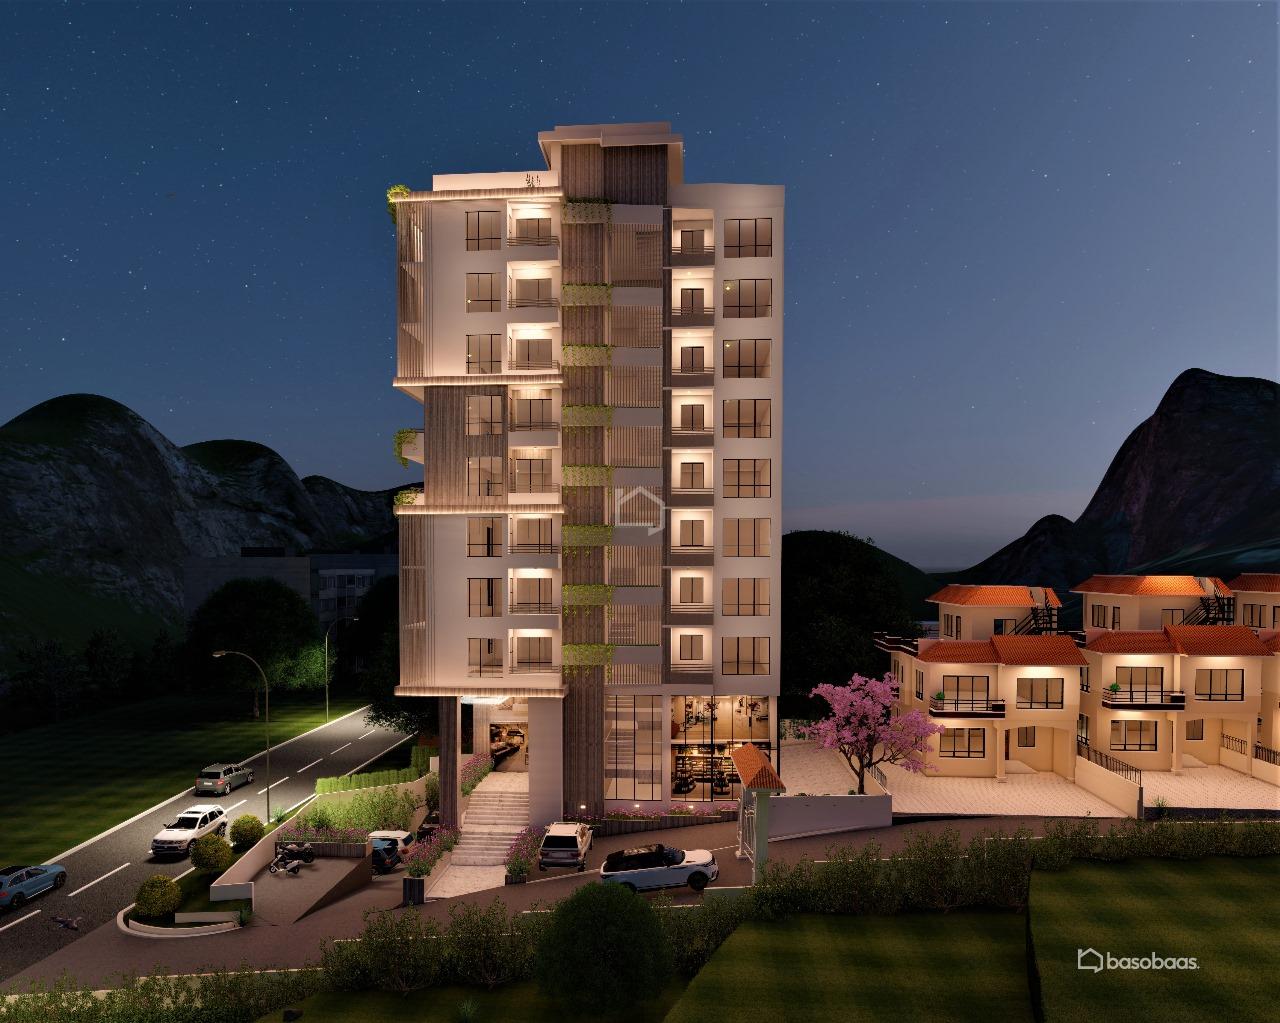 PINEHILL Tower : Apartment for Sale in Sitapaila, Kathmandu Image 4